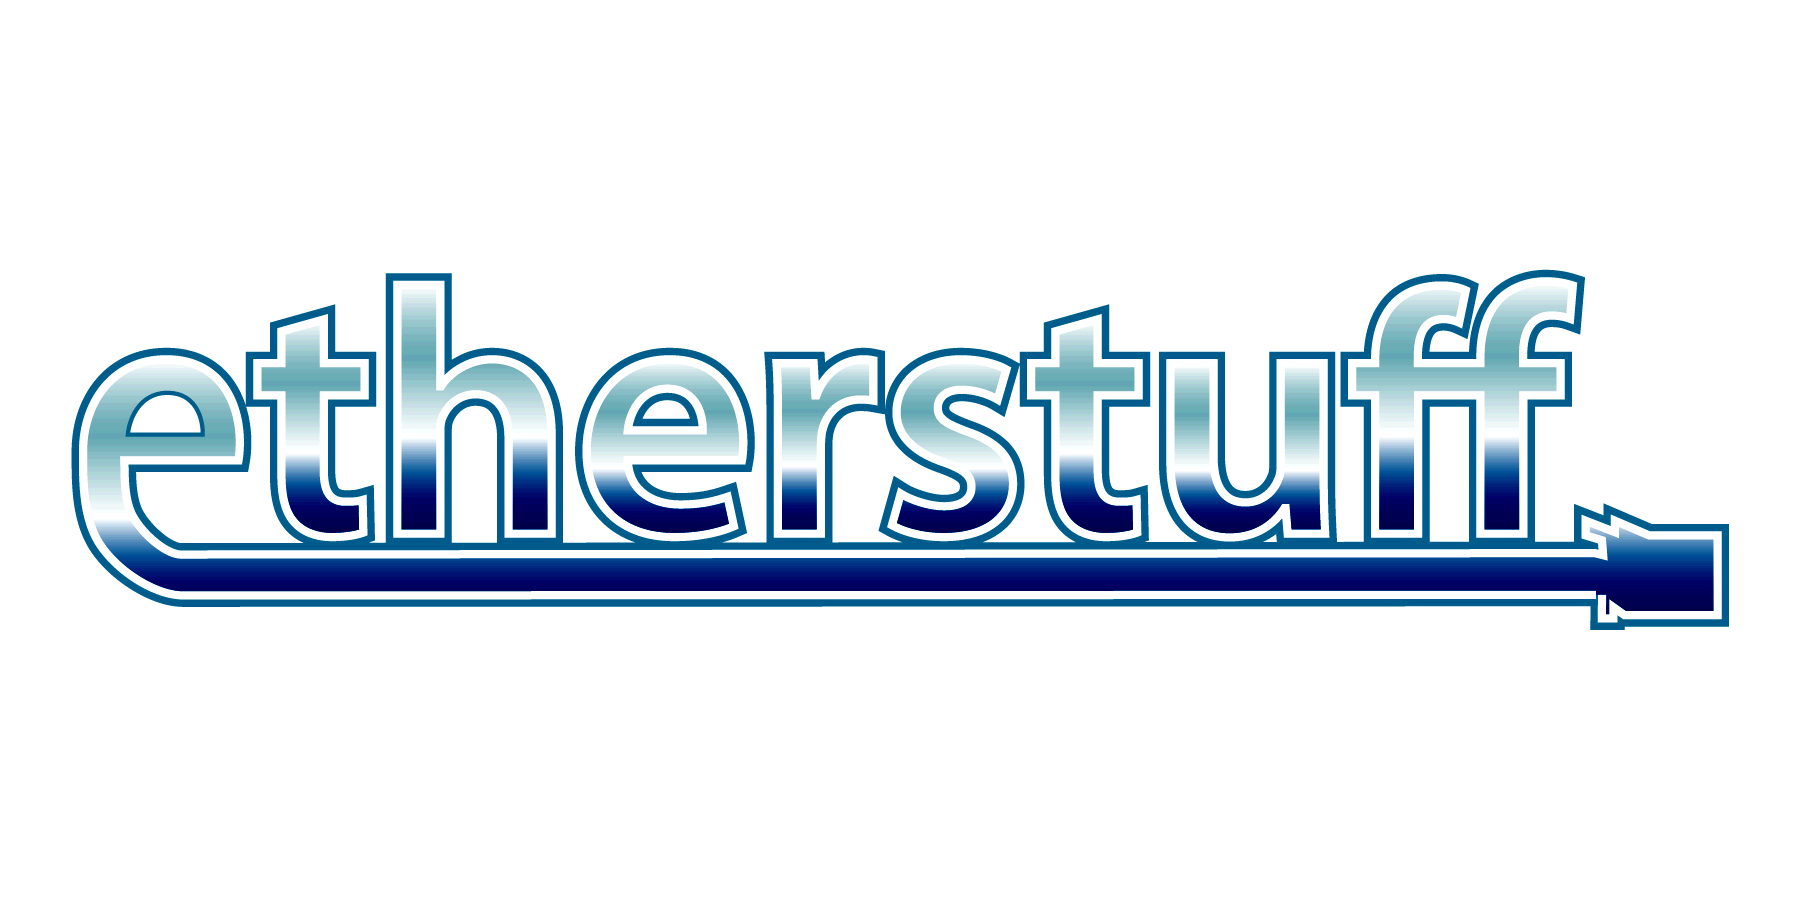 Etherstuff Logo